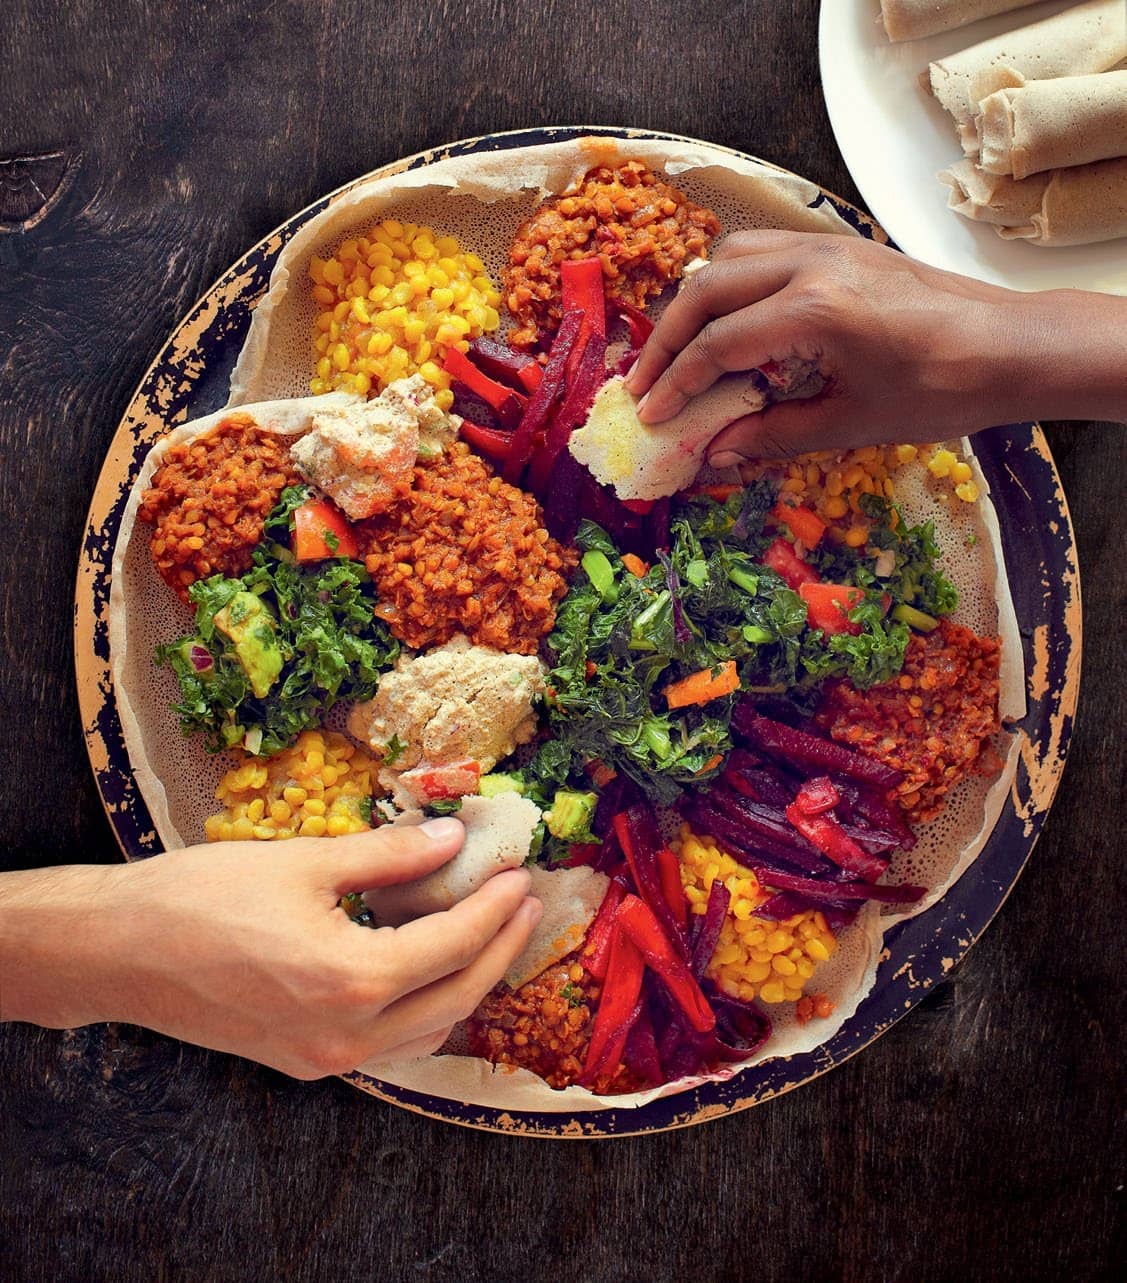 The Ethiopian Food